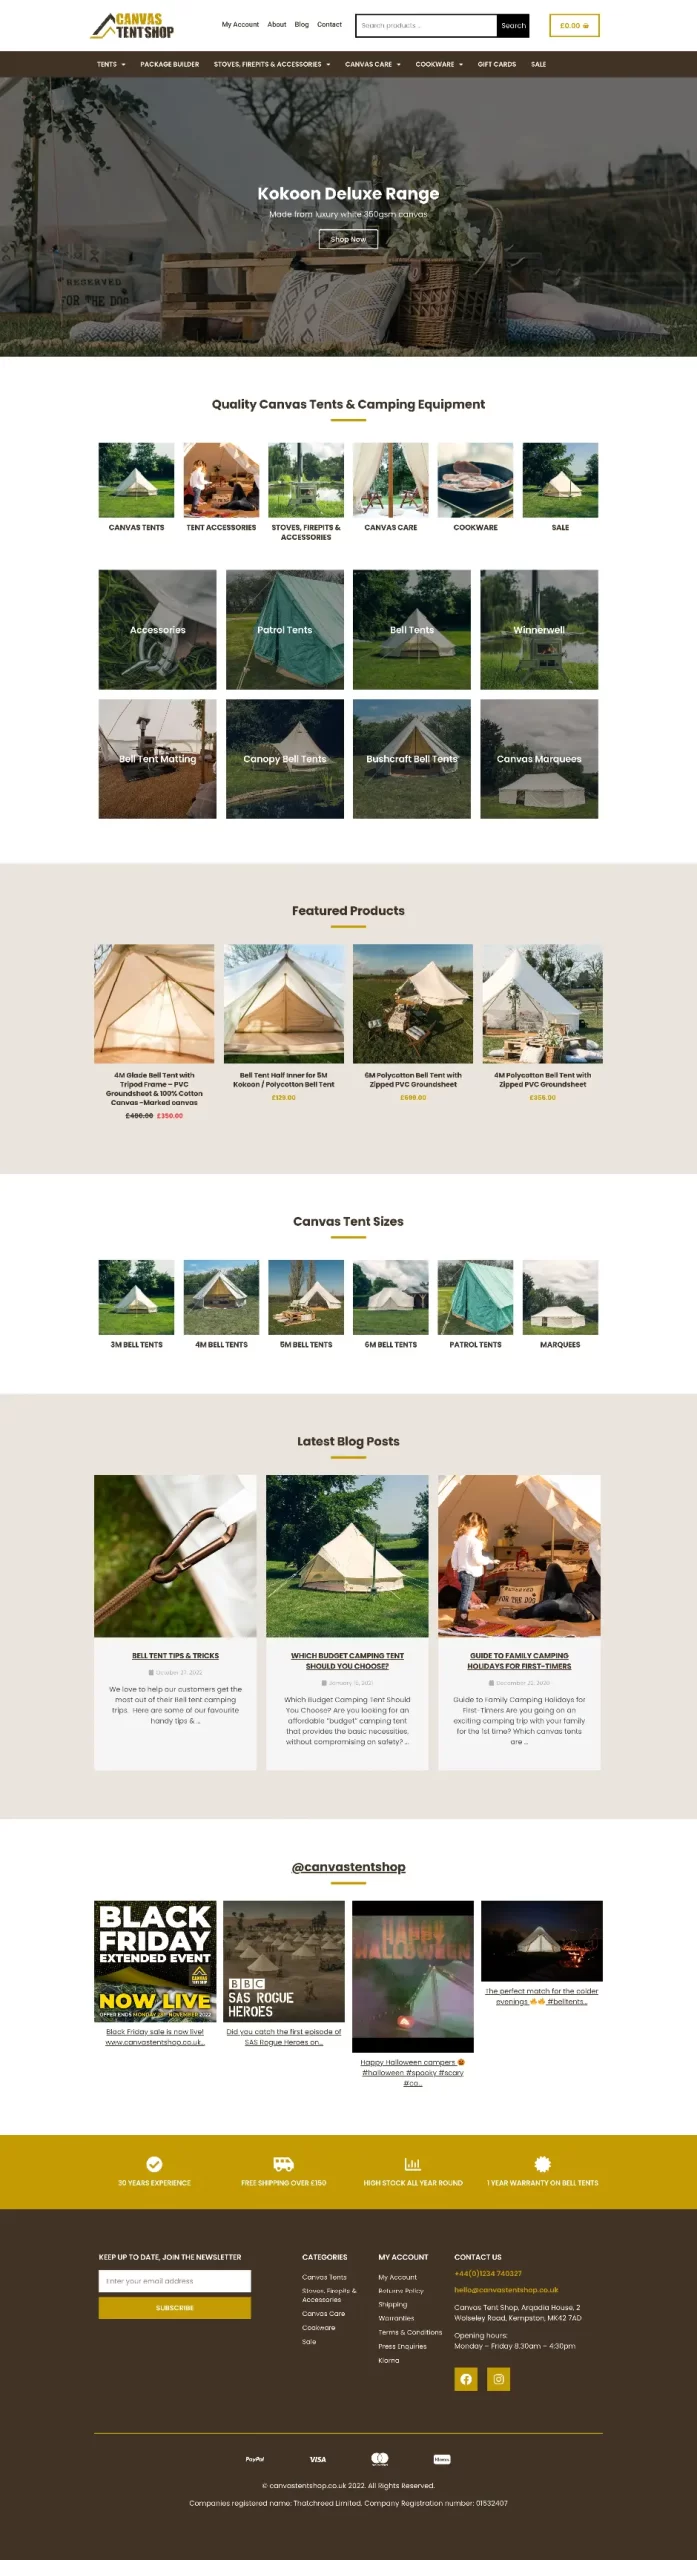 Canvas Tent Shop - homepage